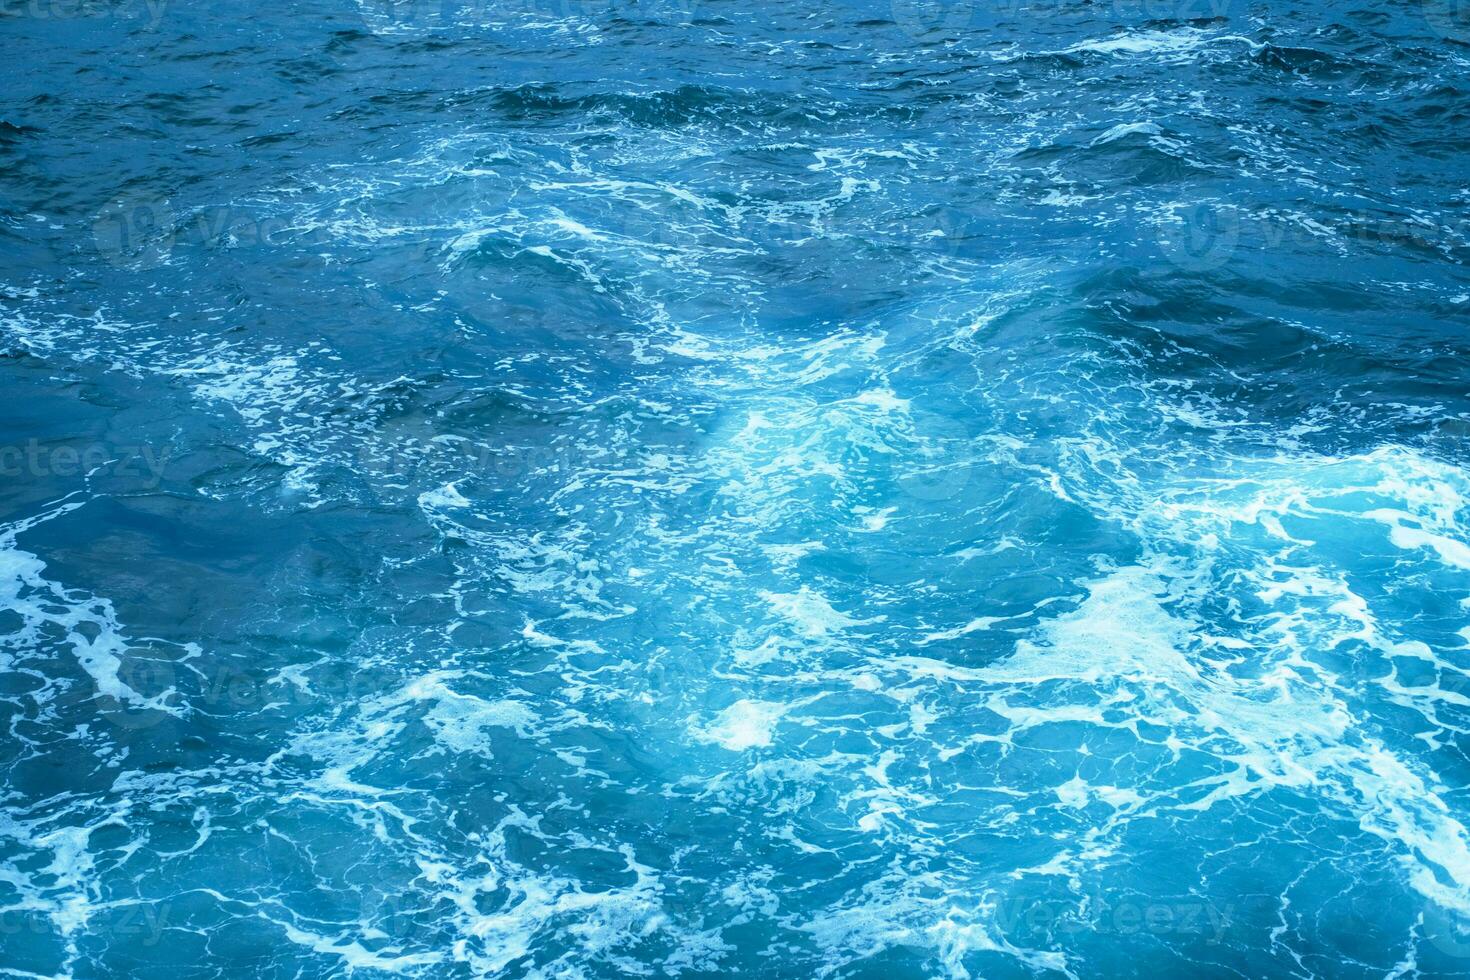 Oceano superficie. resumen agua antecedentes. ola modelo. foto